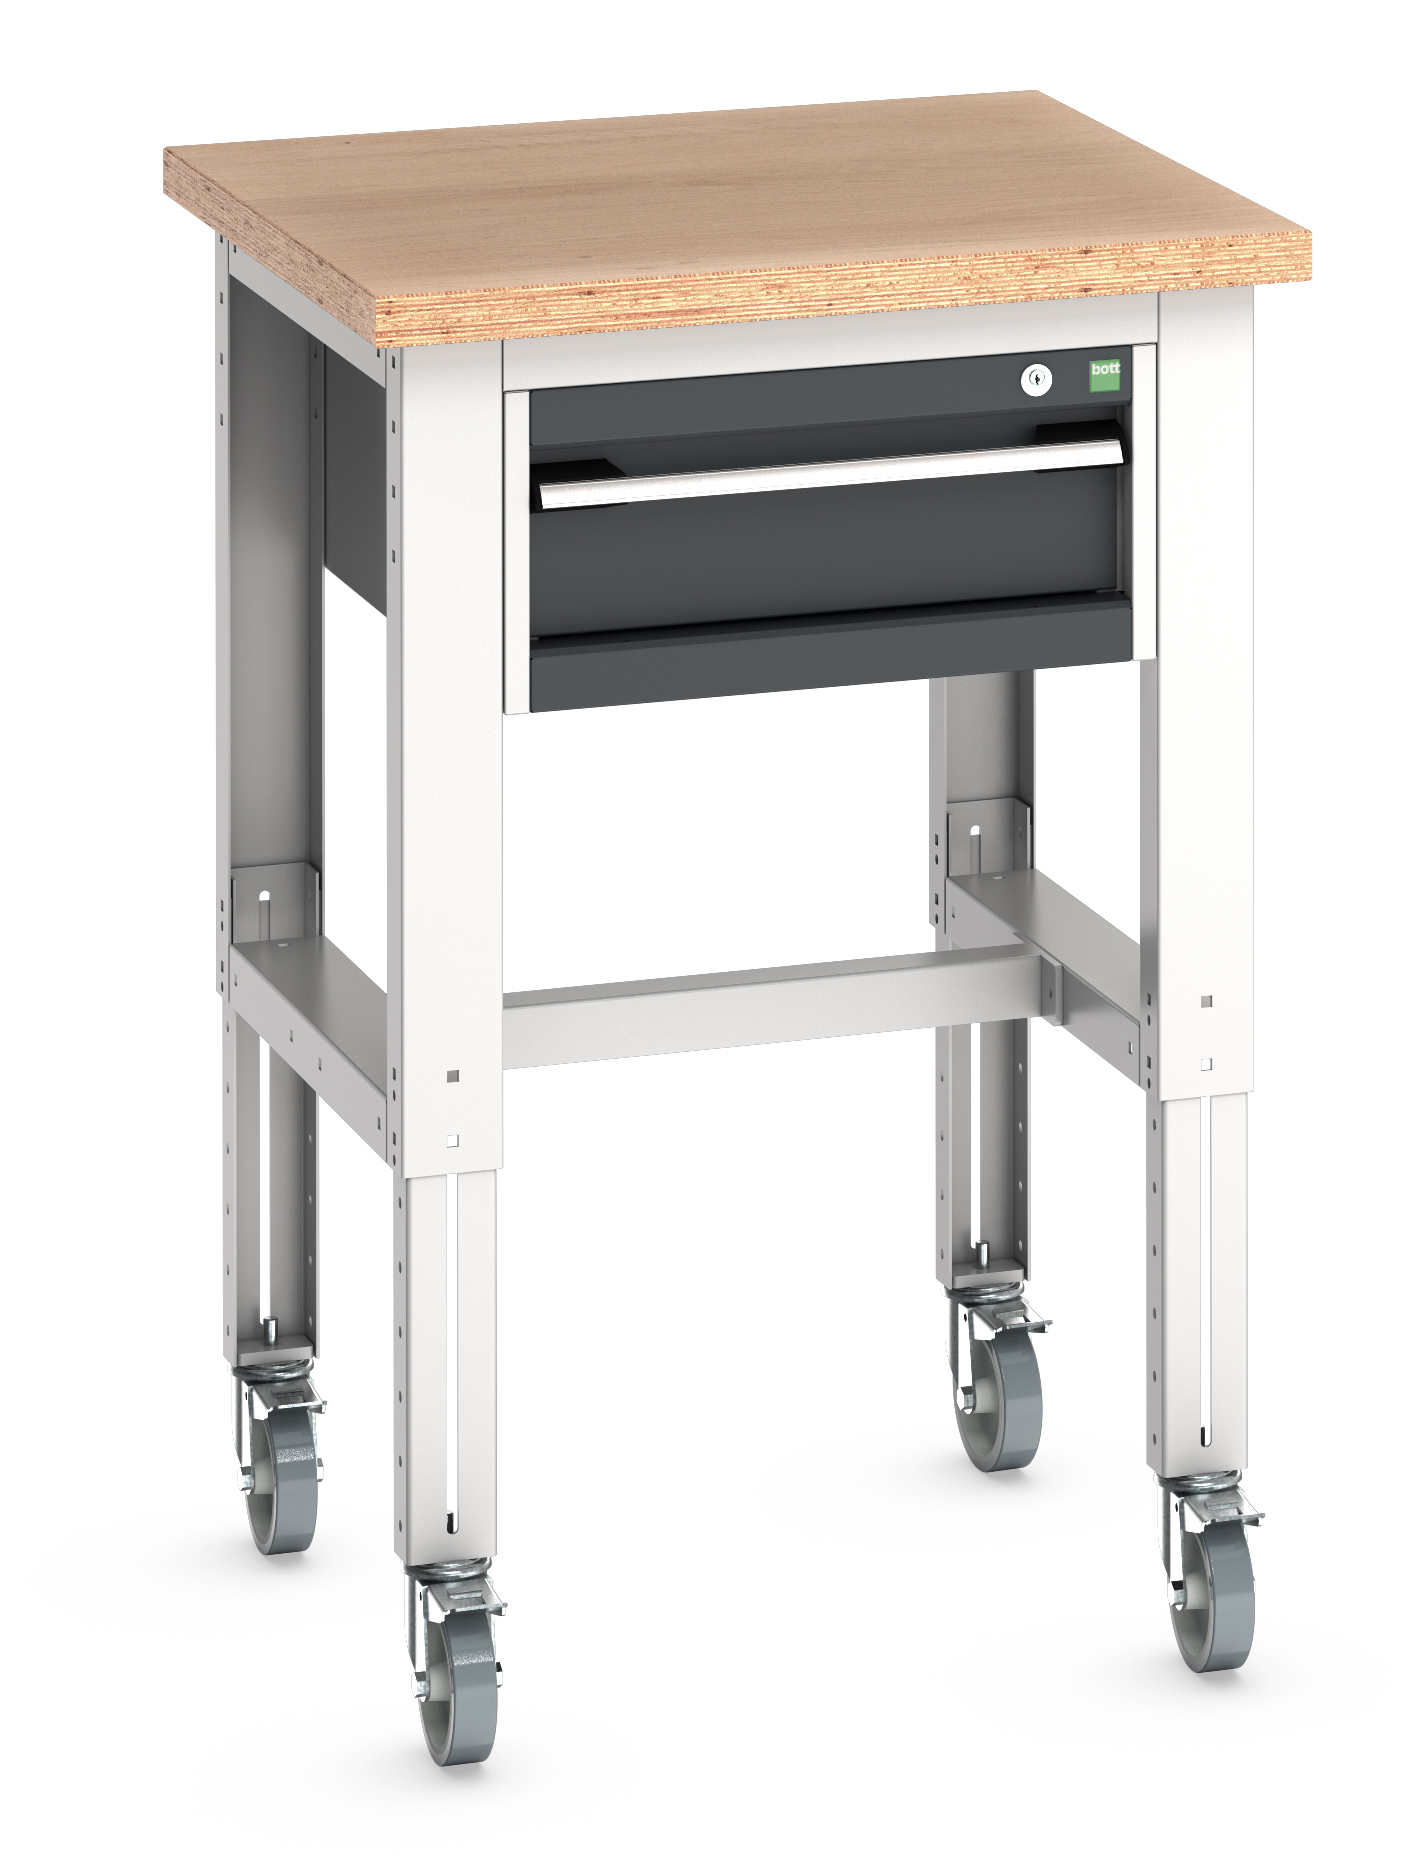 Bott Cubio Adjustable Height Mobile Workstand With 1 Drawer Cabinet - 41003271.19V